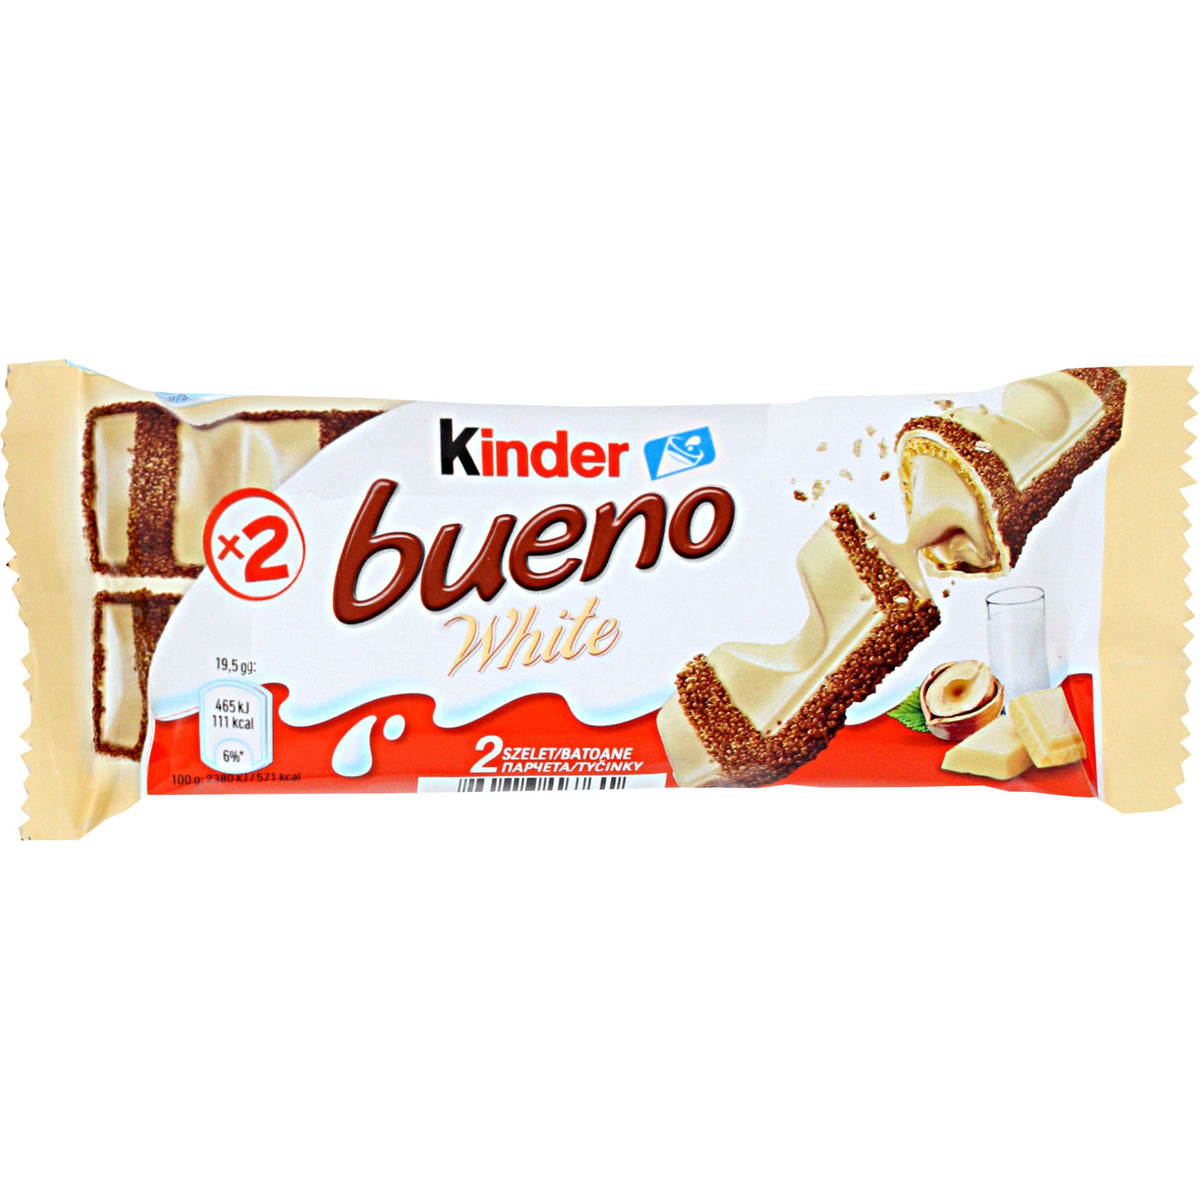 Ferrero USA Bueno white - Kinder - Rocket Fizz Lancaster